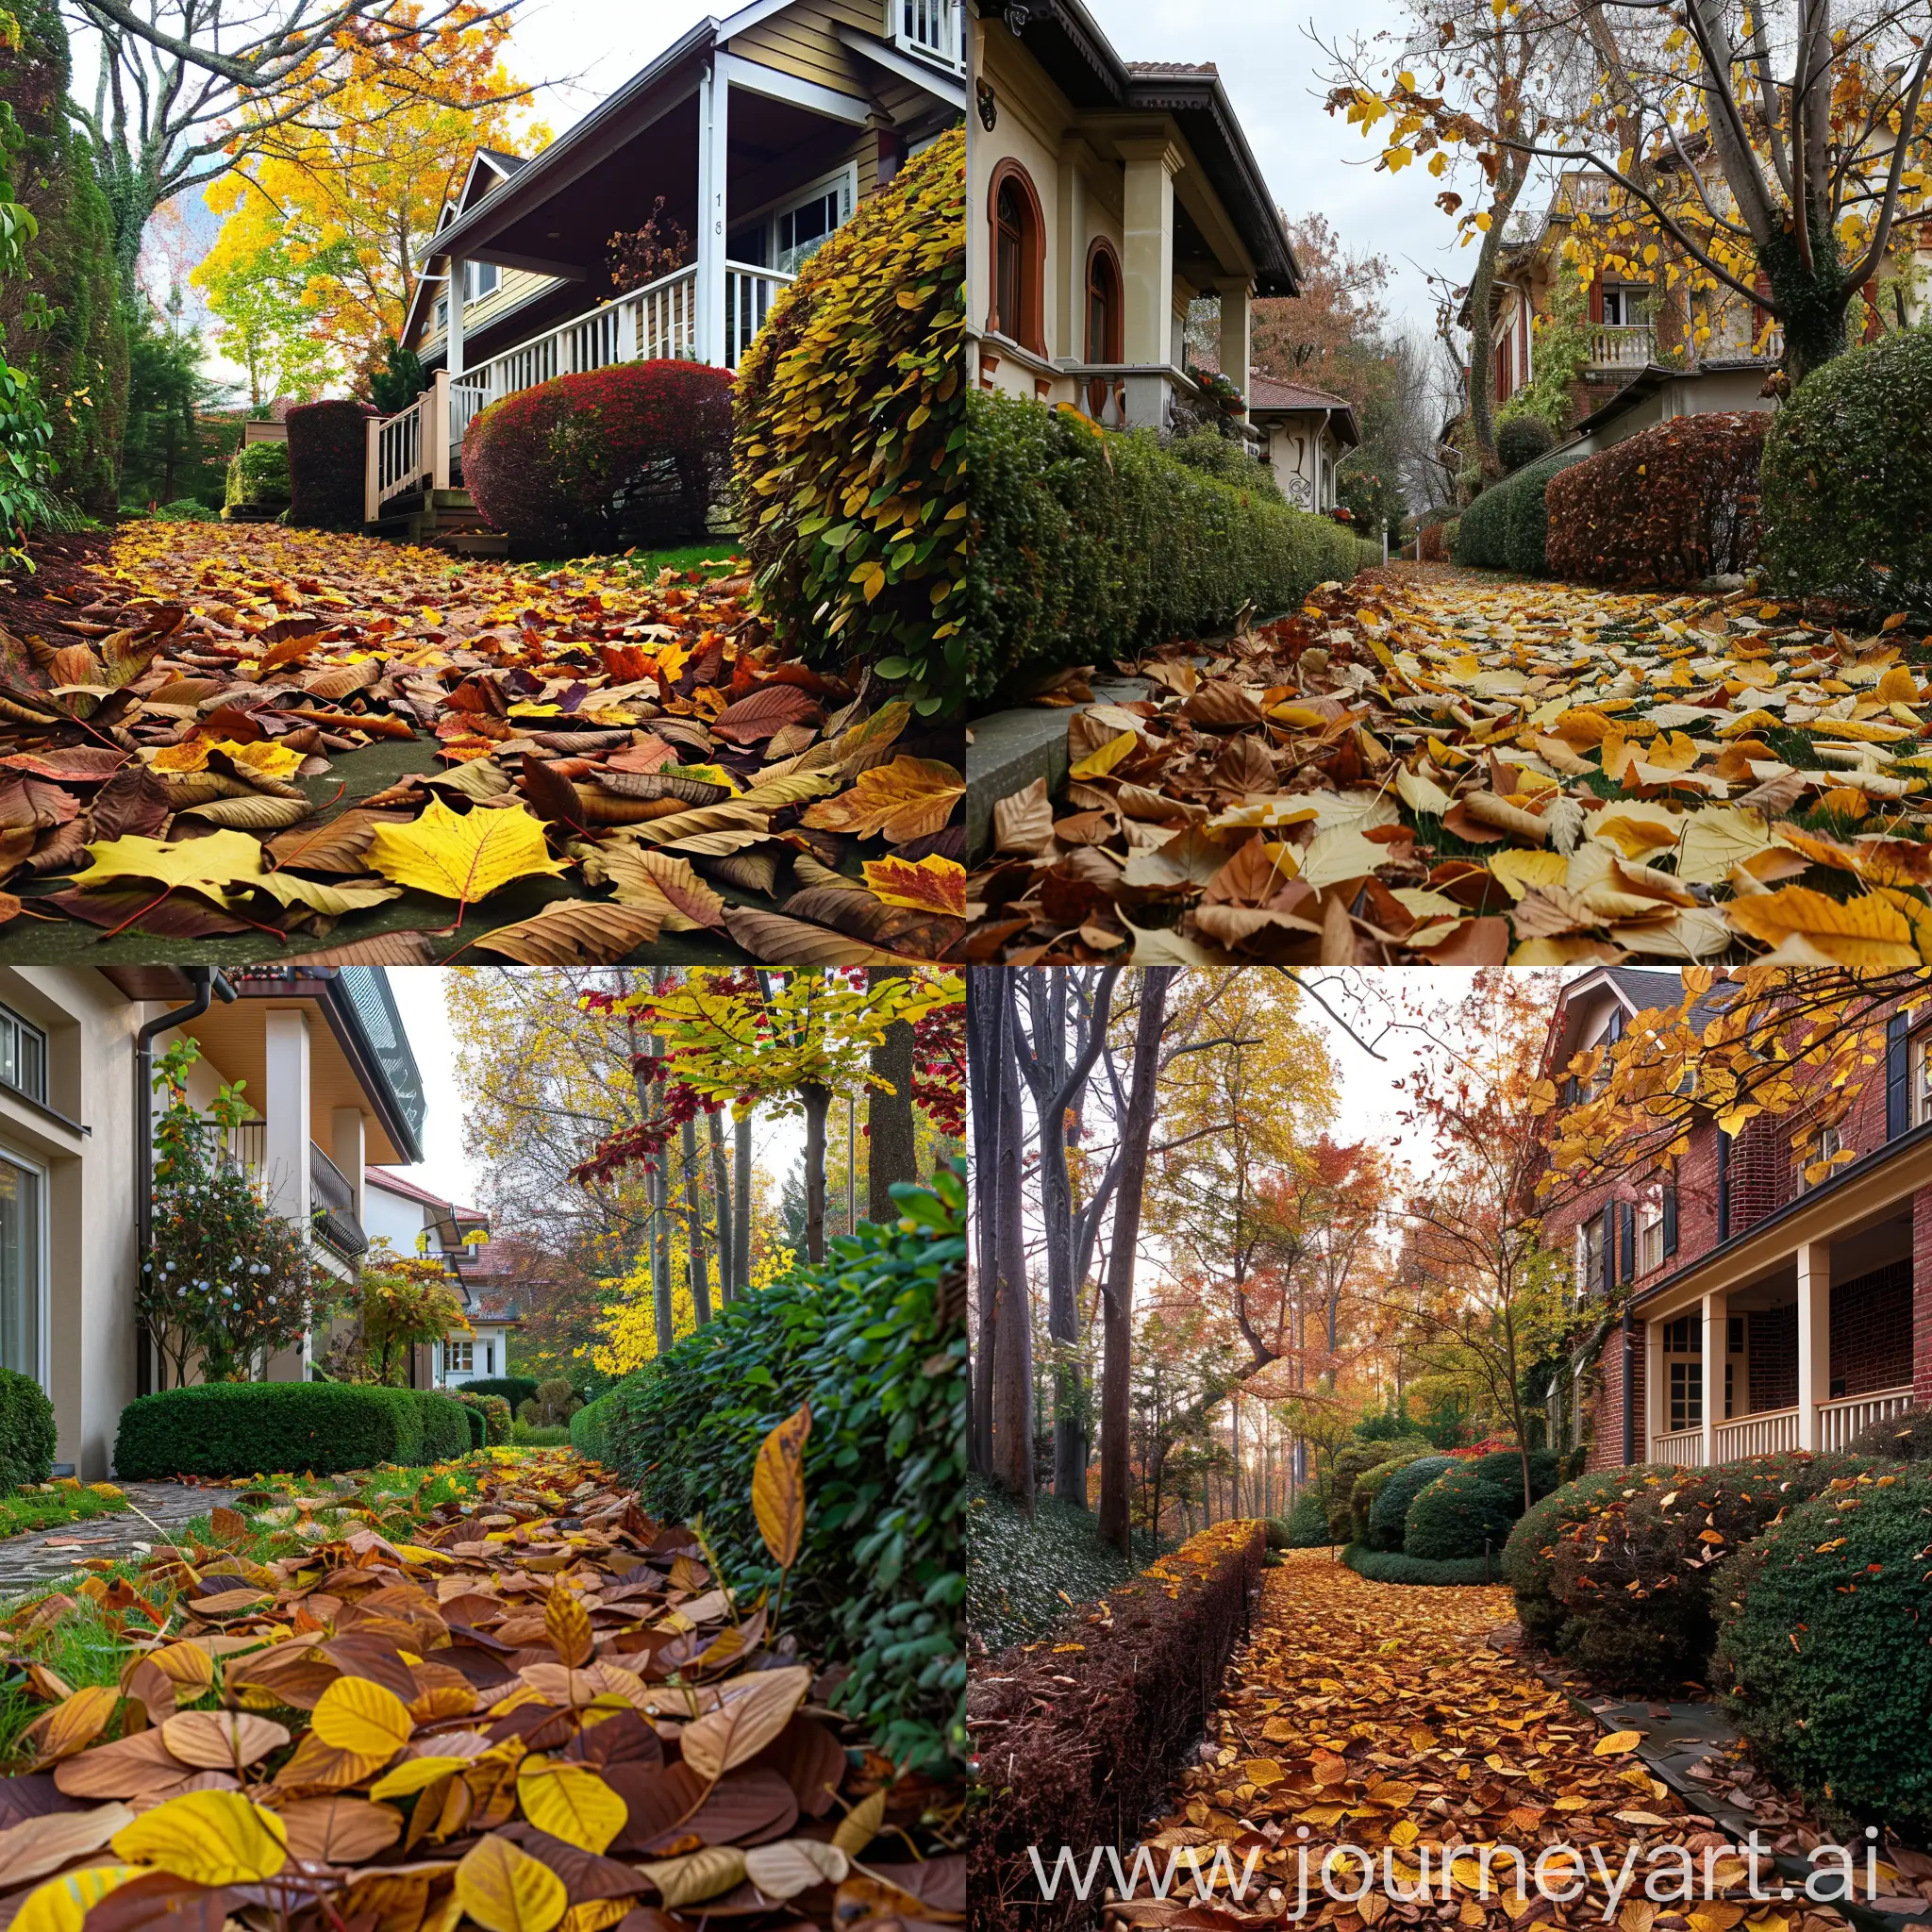 Scenic-Autumn-Garden-with-Vibrant-Foliage-and-Elegant-House